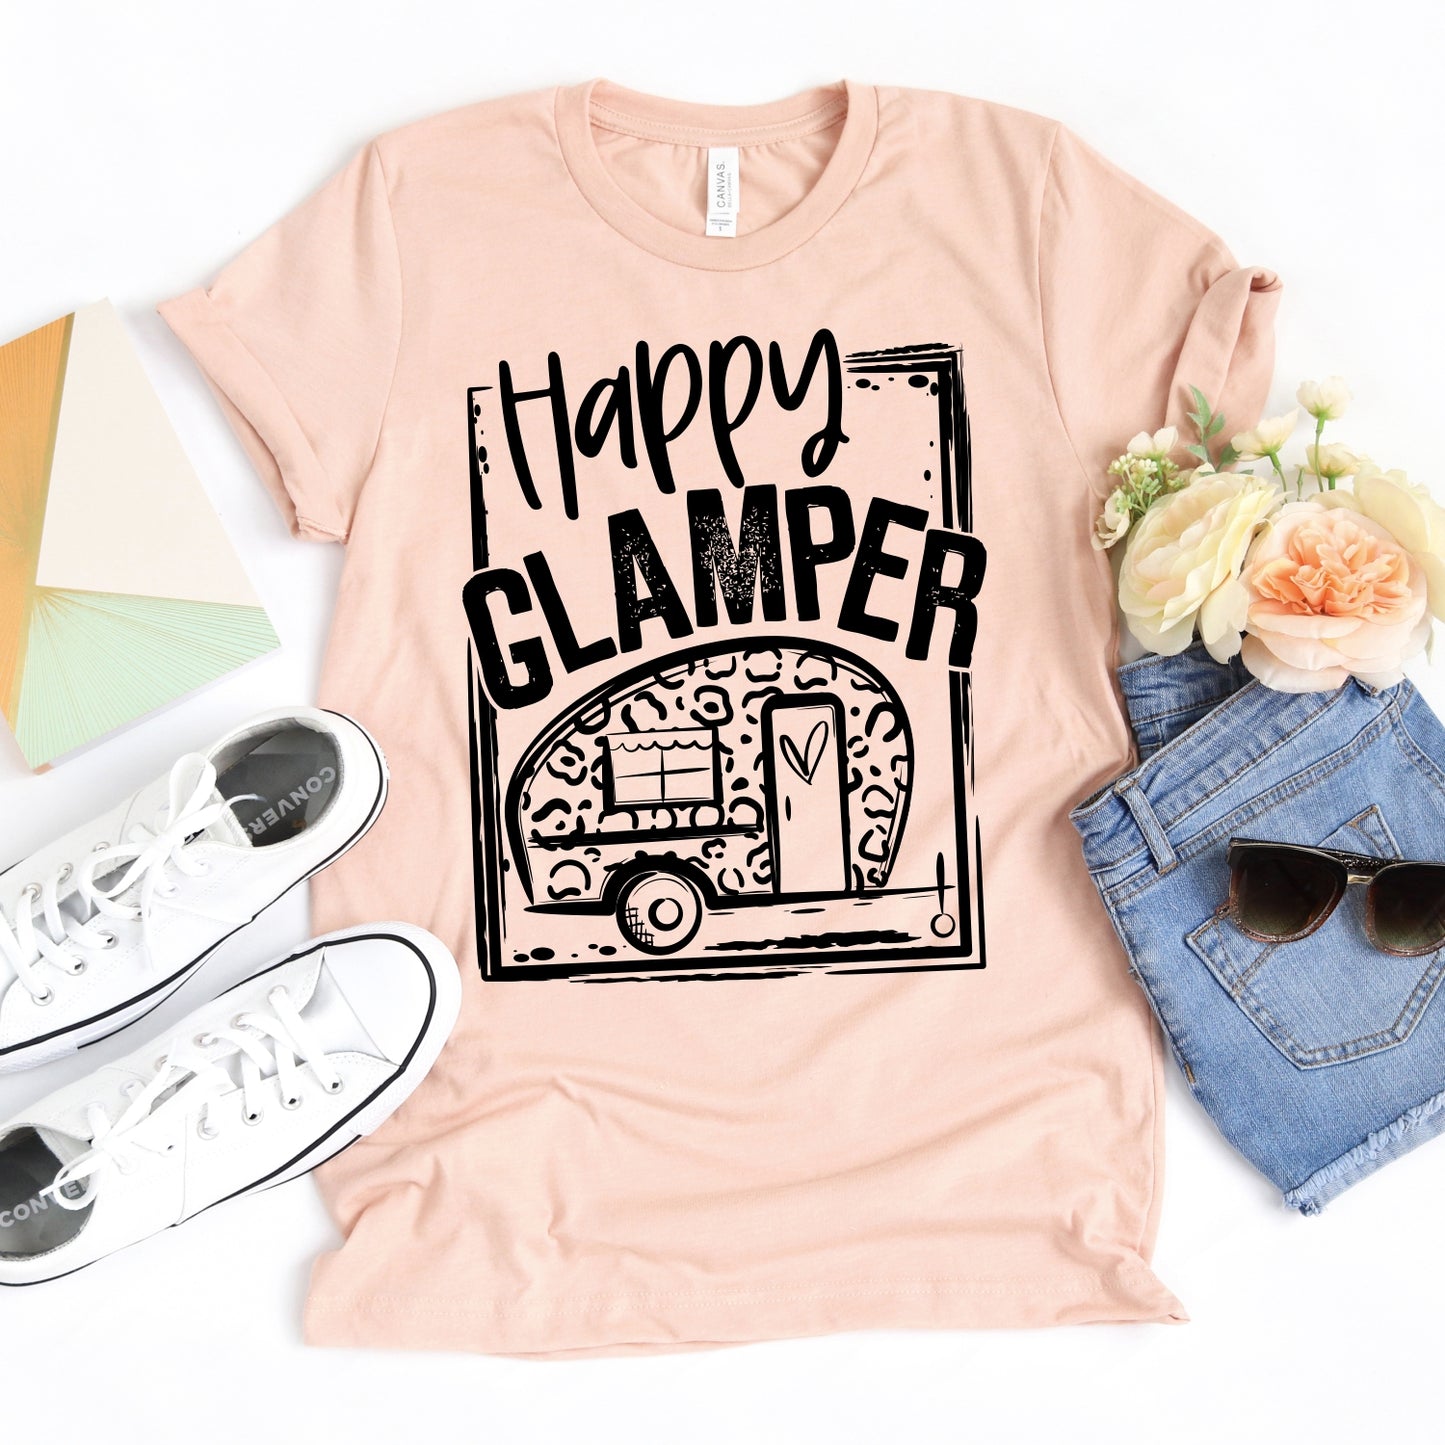 Happy glamper